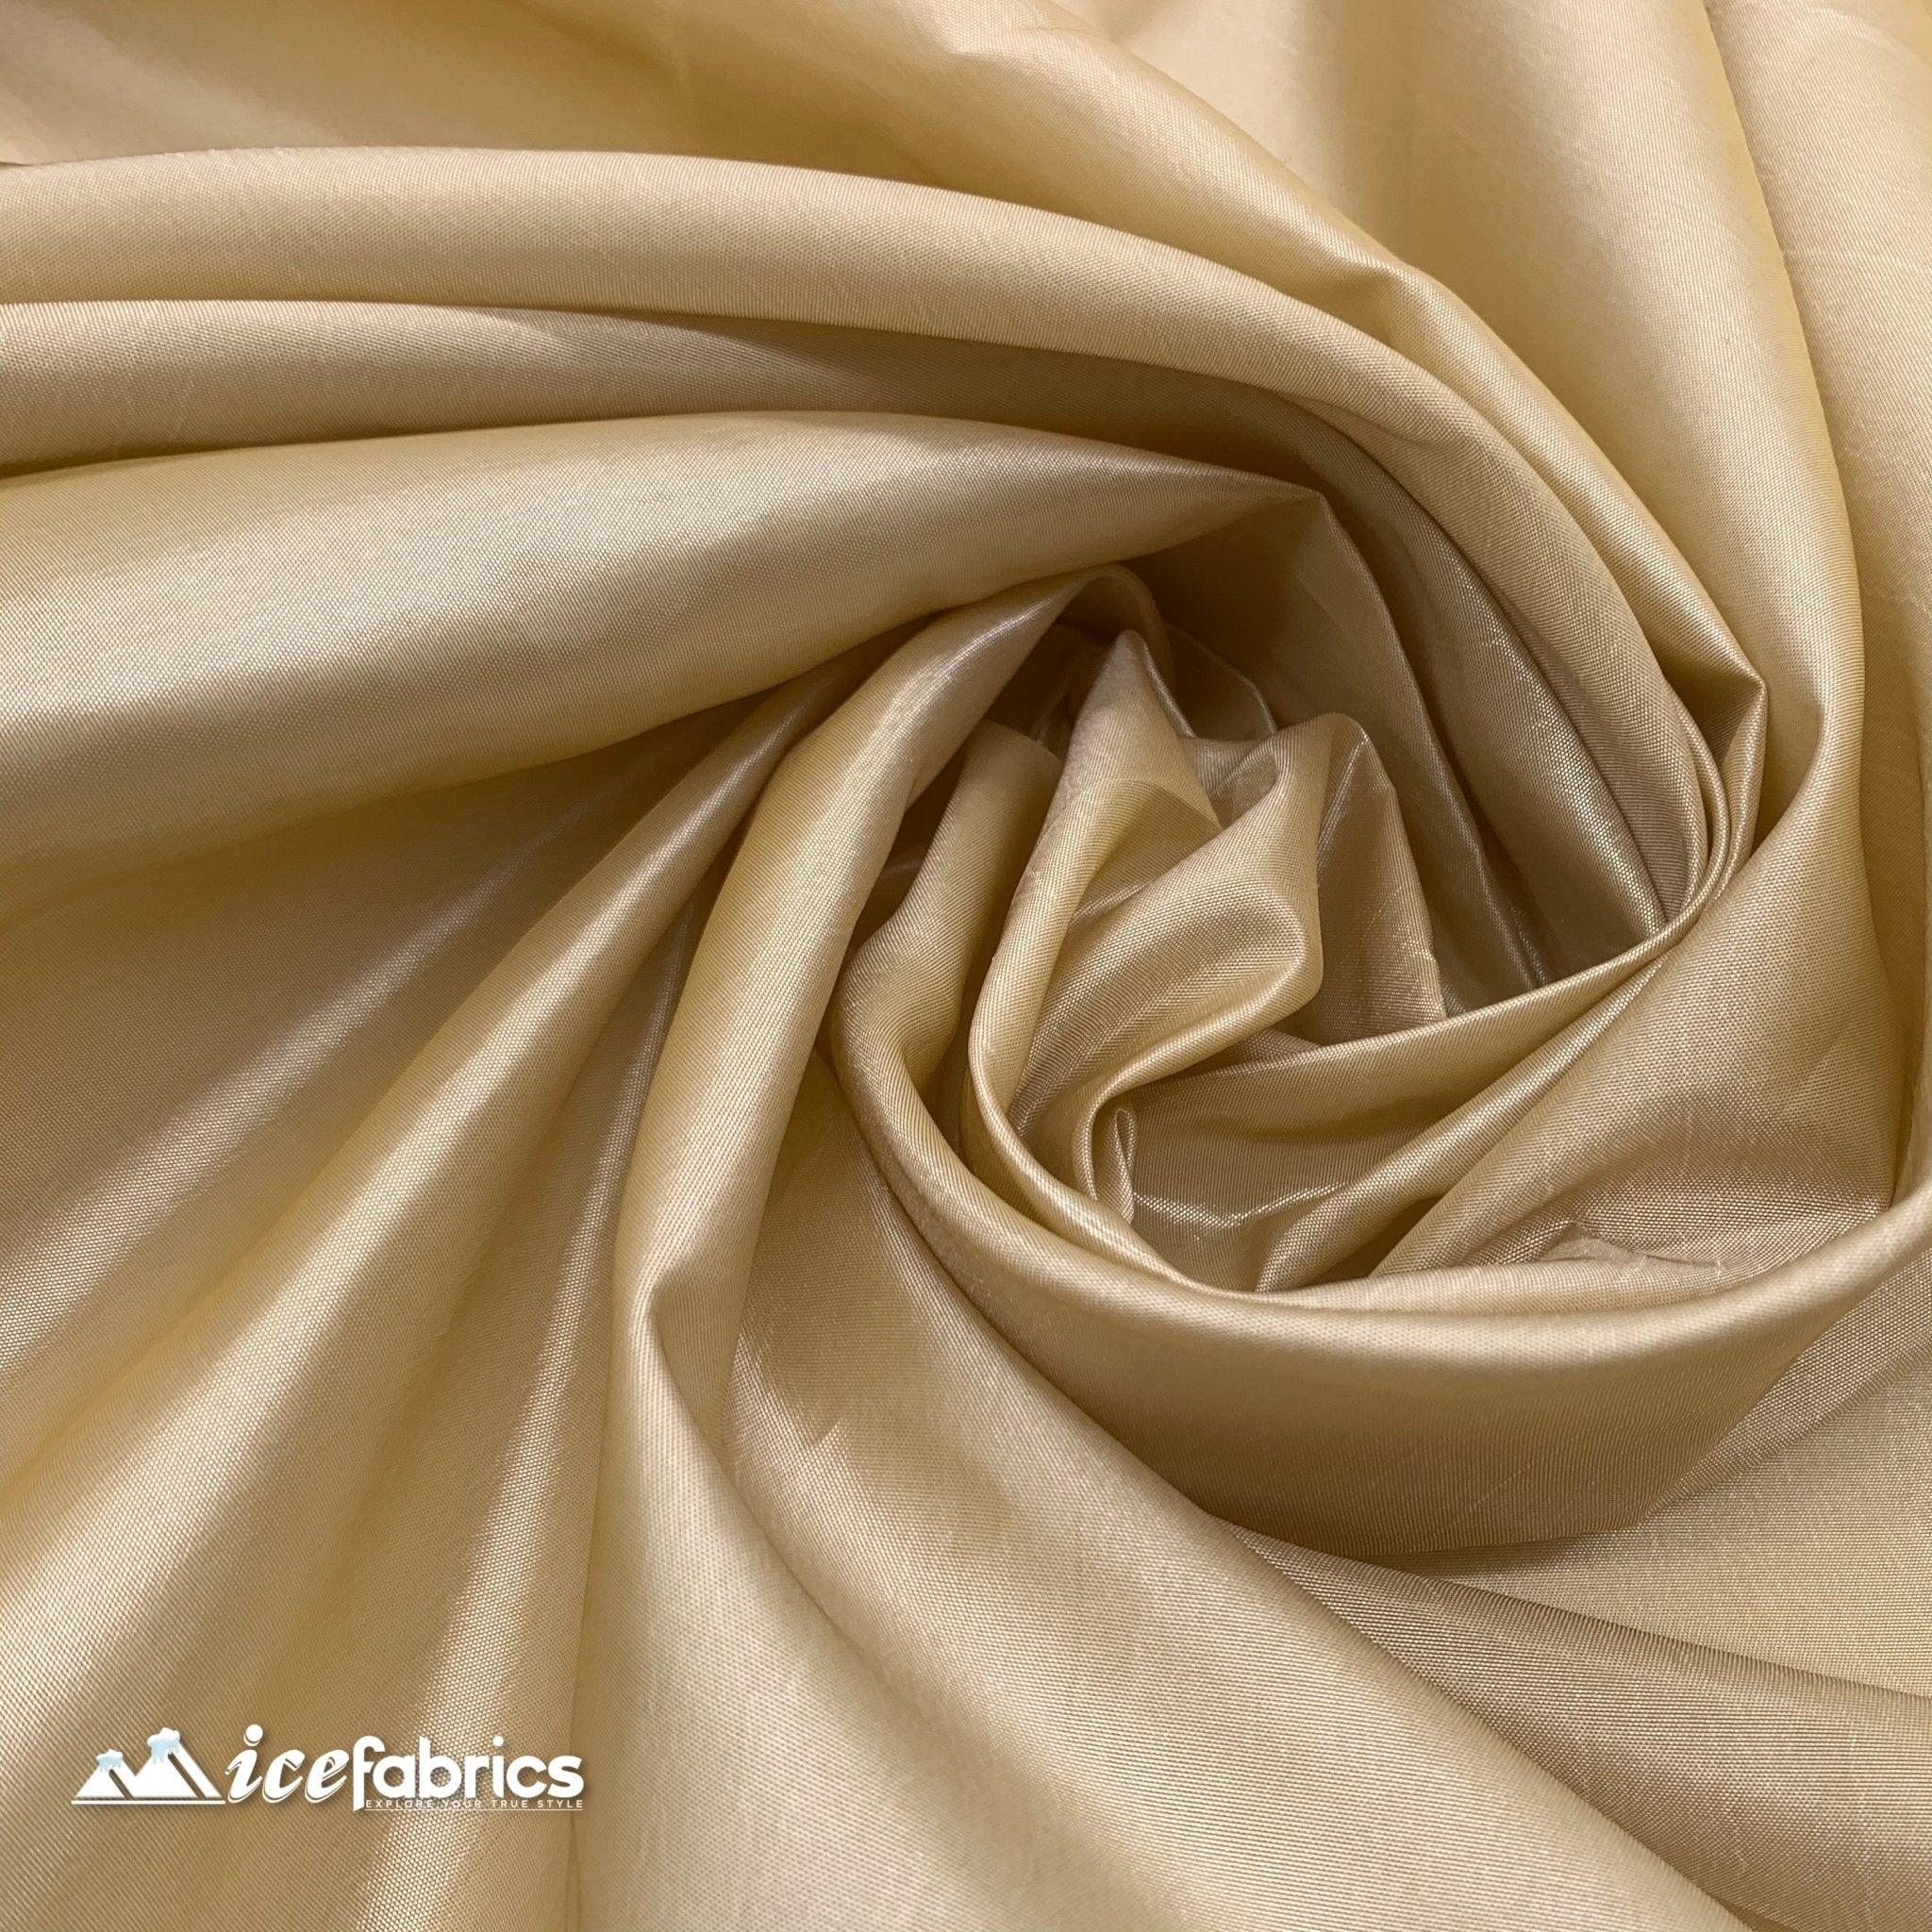 Taffeta Fabric By The Roll (20 yards)Taffeta Wholesale Fabric